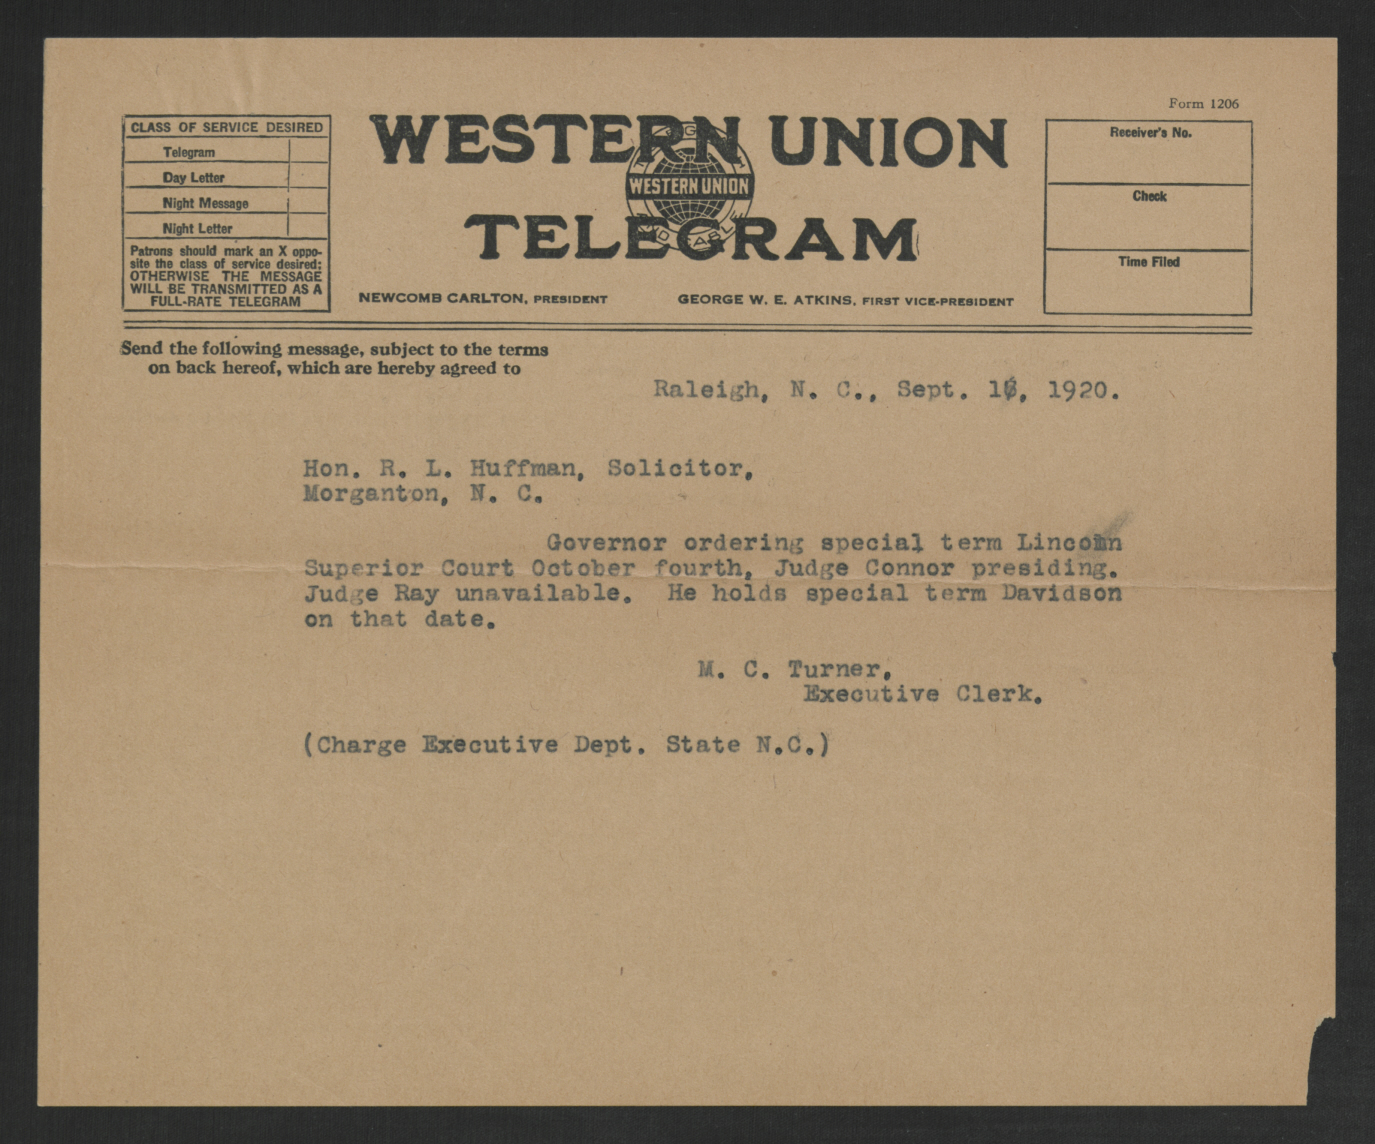 Telegram from Mamie C. Turner to Robert L. Huffman, September 17, 1920